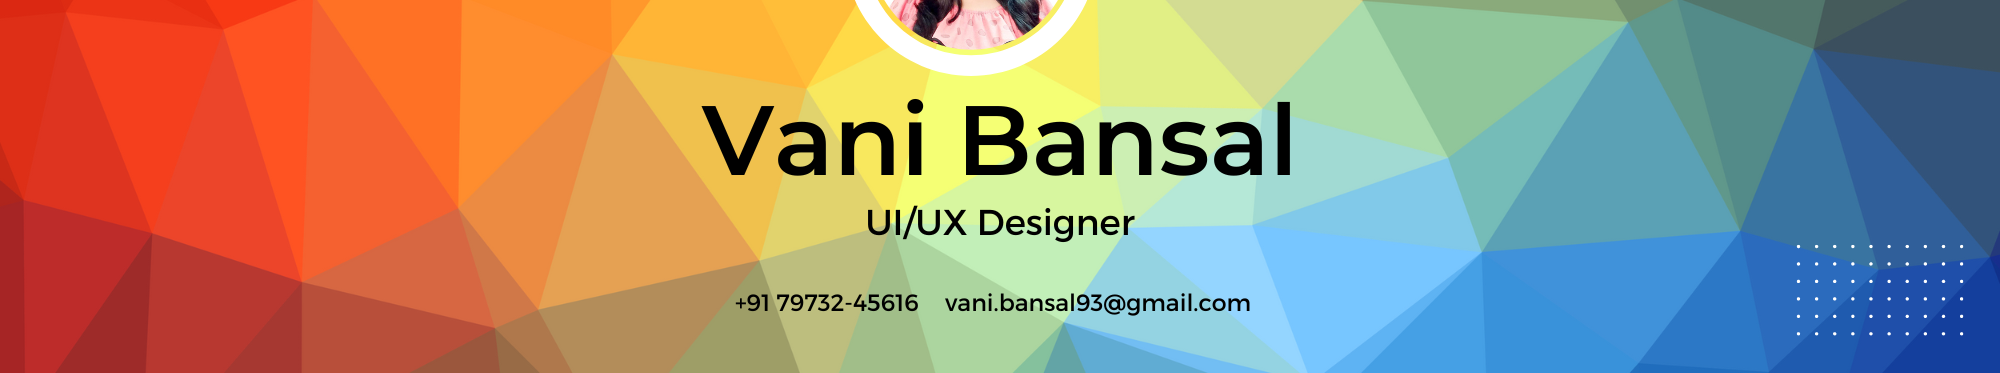 Profielbanner van Vani Bansal